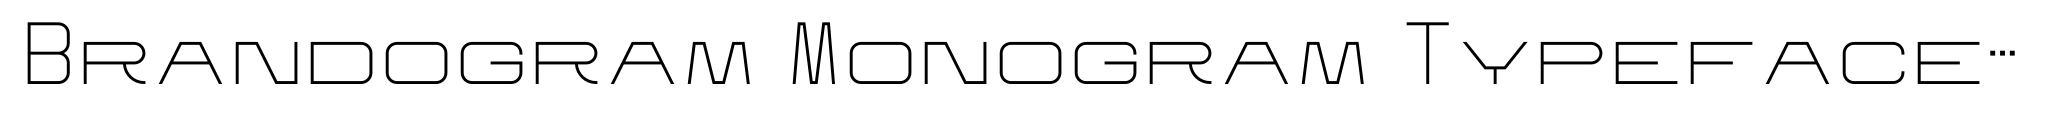 Brandogram Monogram Typeface Light image